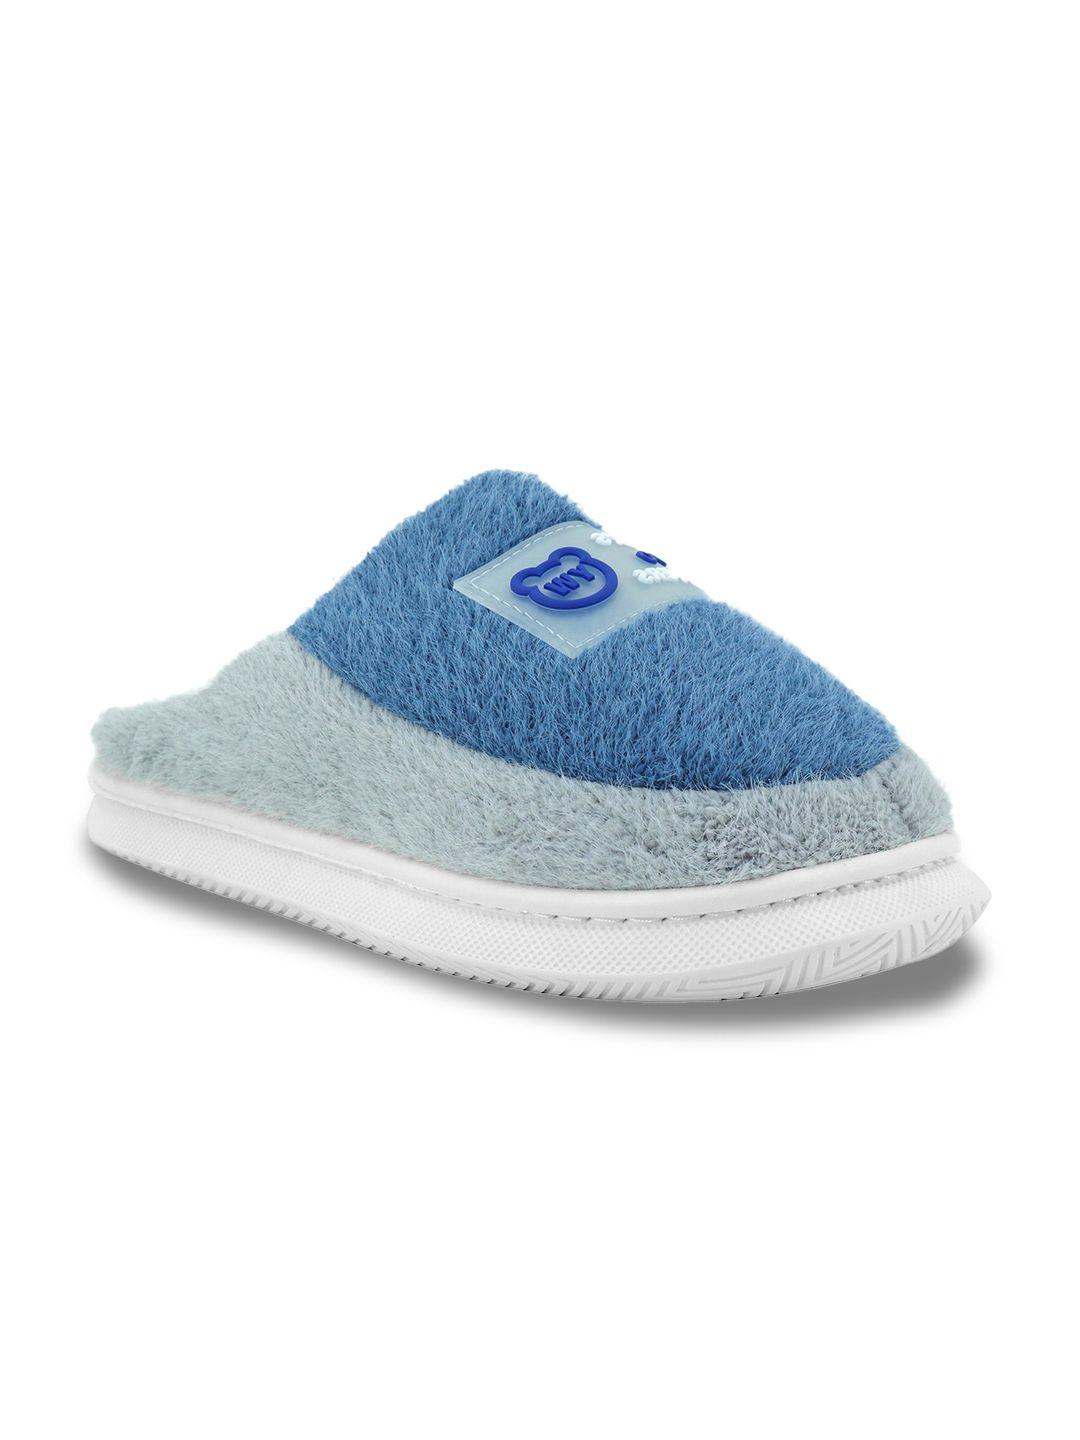 cassiey men blue & grey colourblocked room slippers